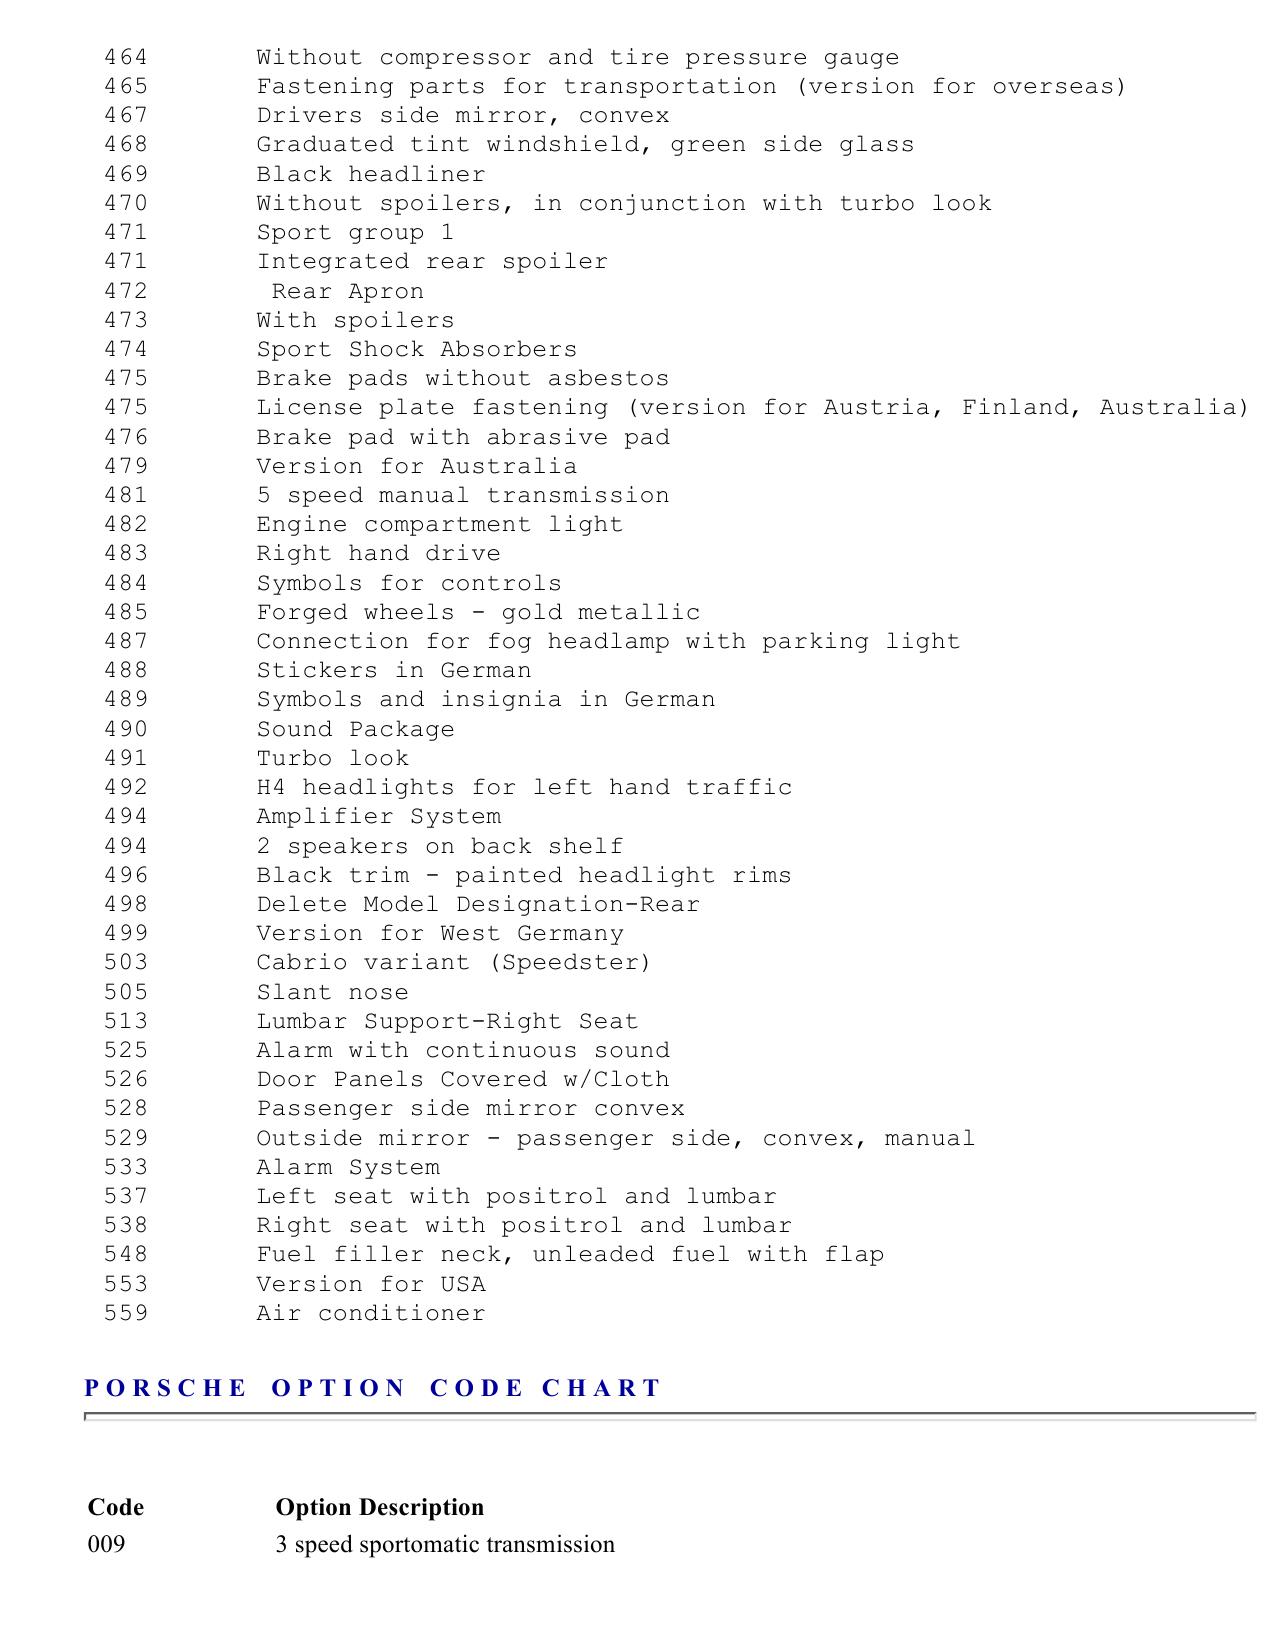 Porsche 944 And 951 And 968 Option Codes Porsche Cars History